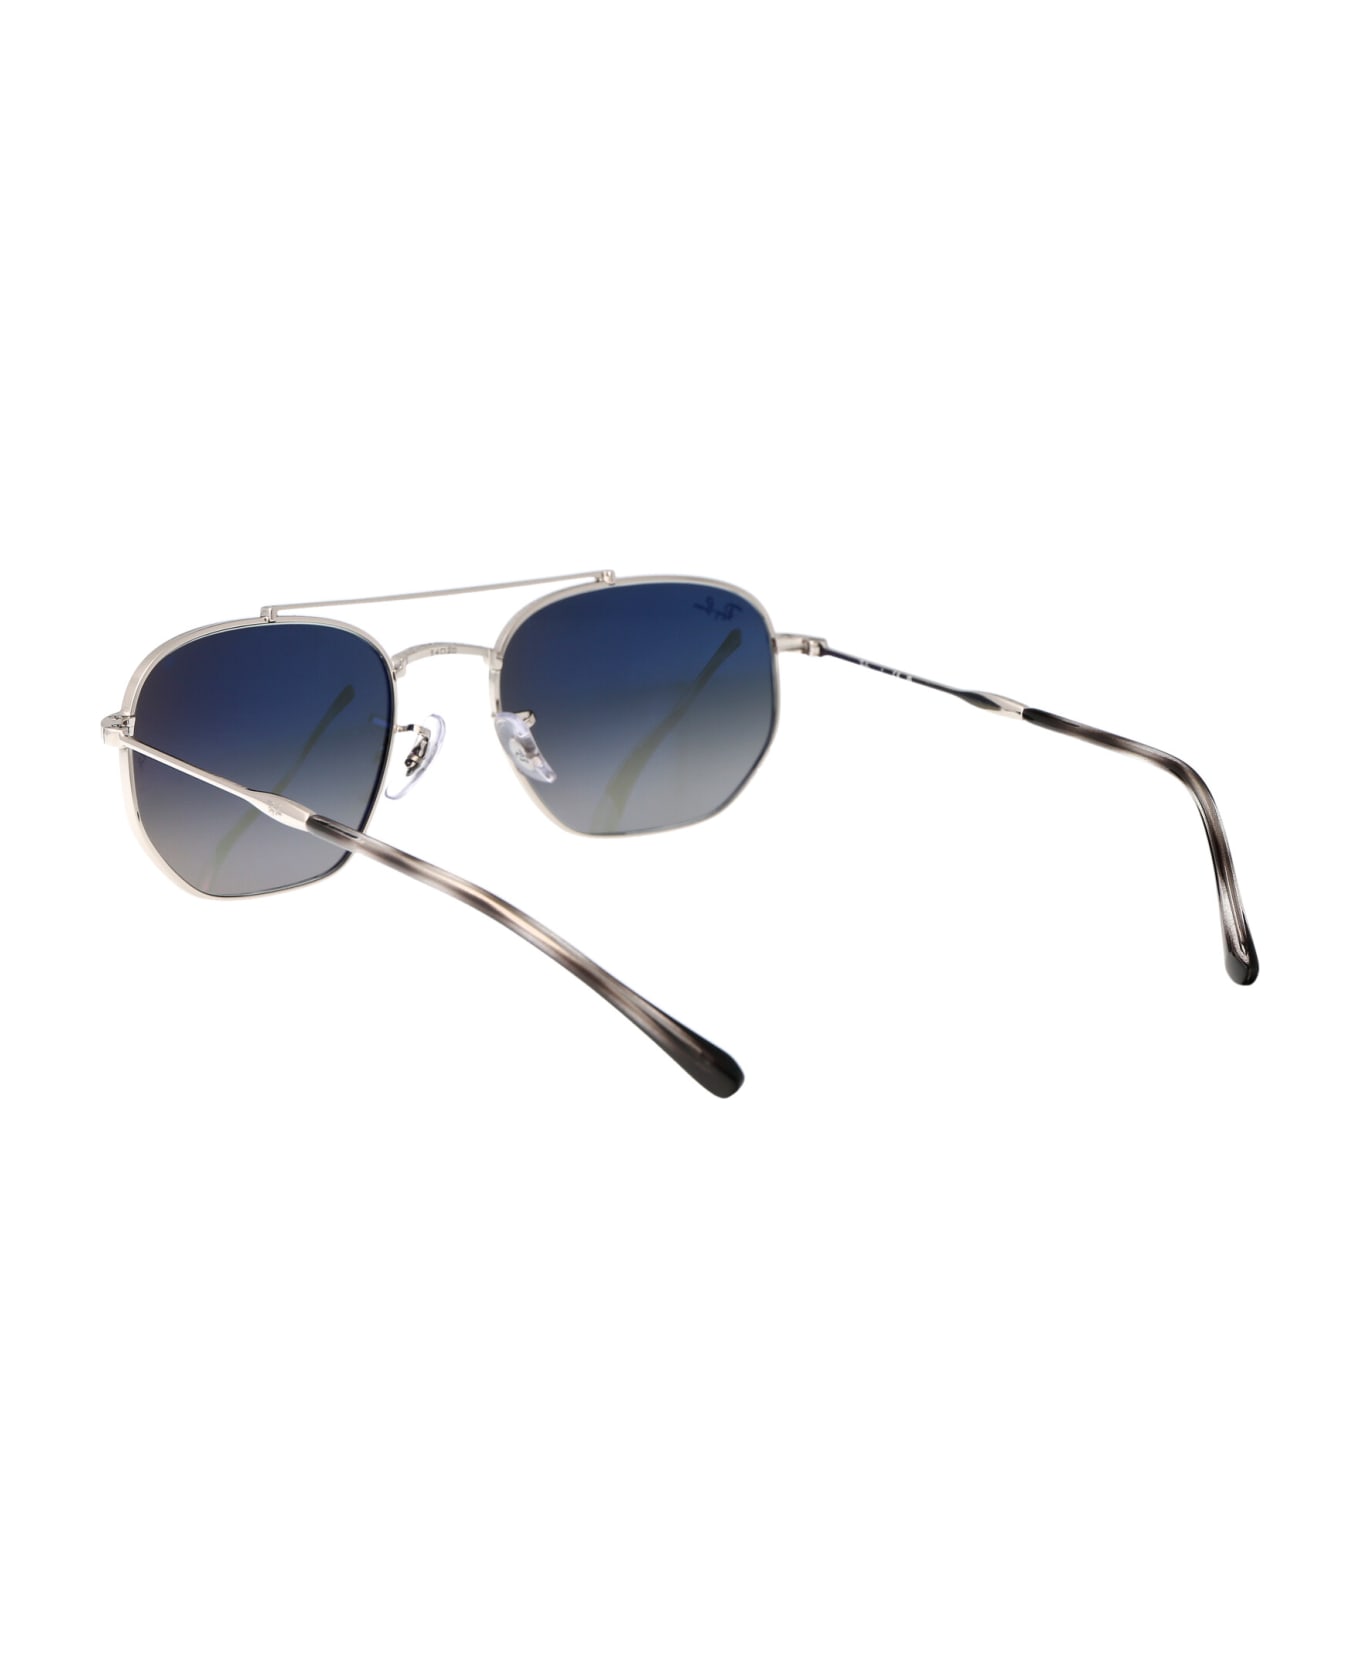 Ray-Ban 0rb3707 Sunglasses - 003/71 SILVER サングラス